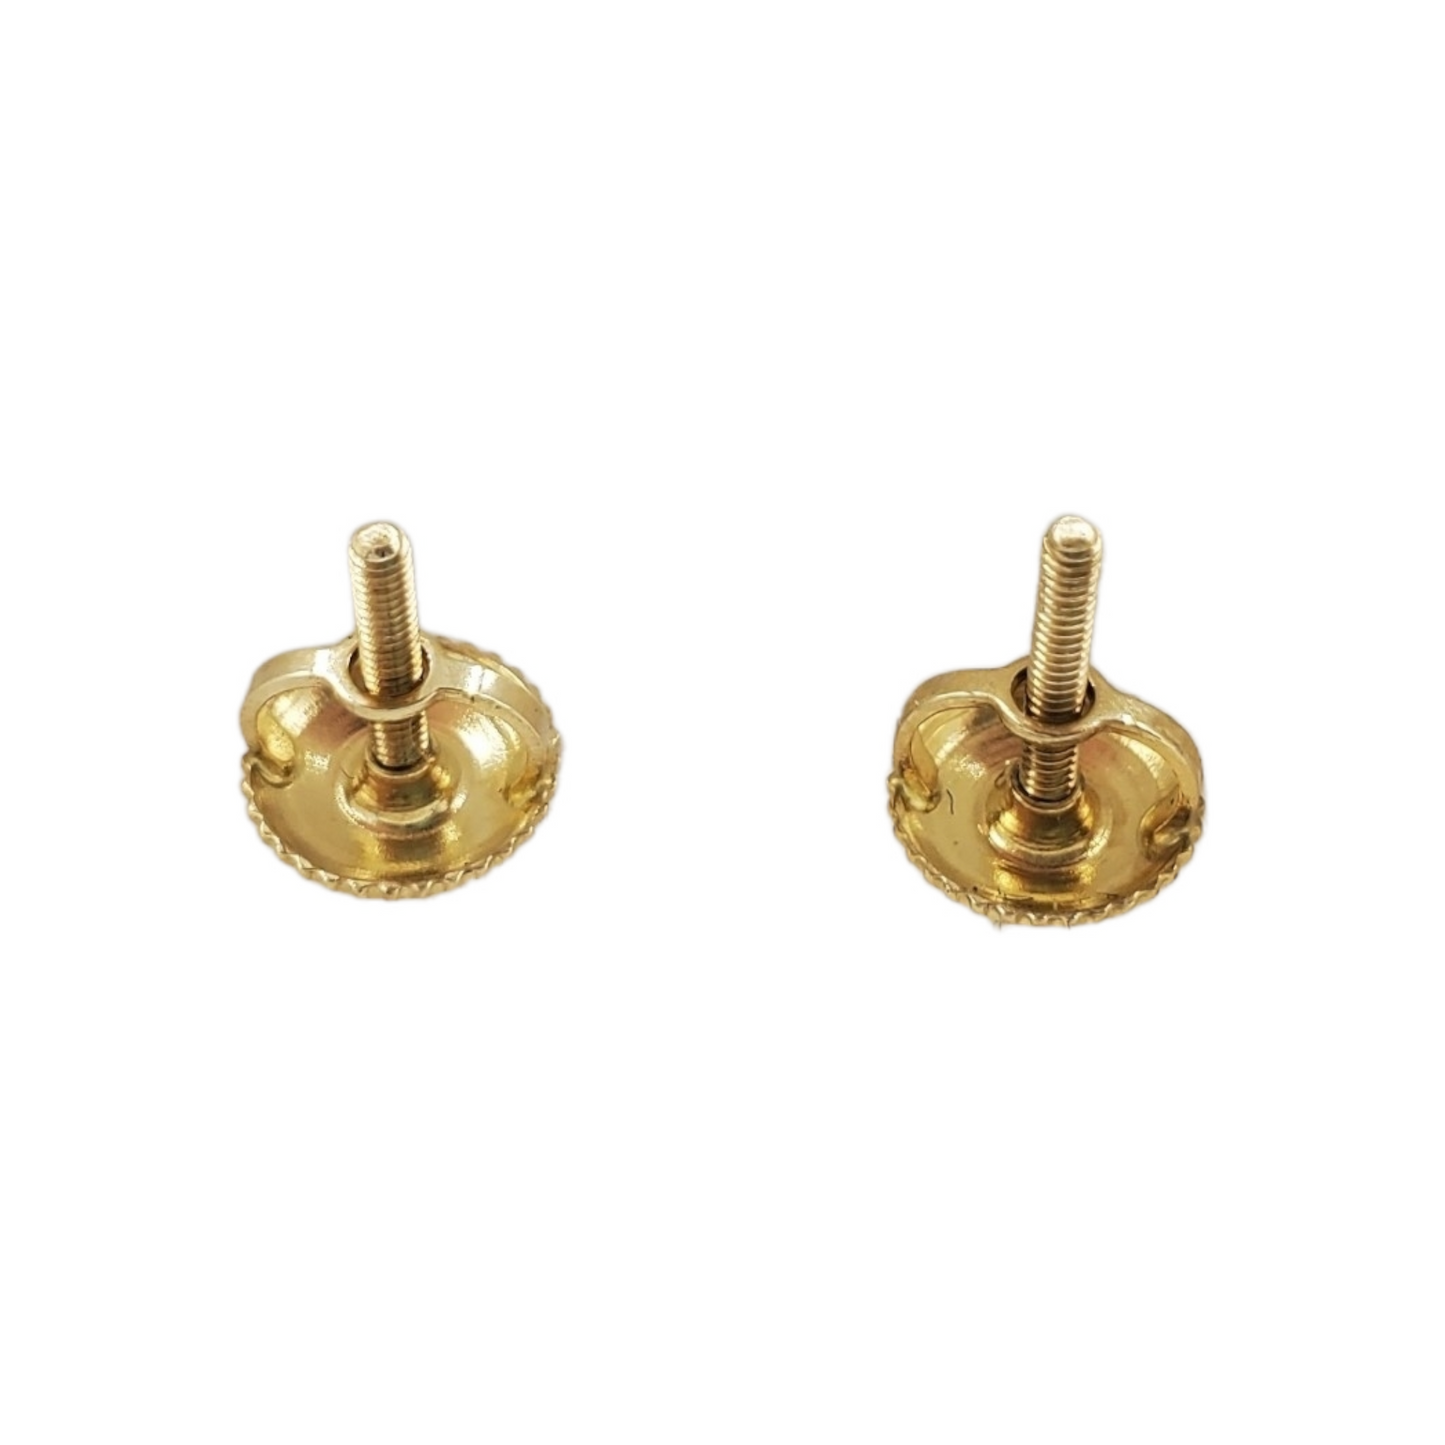 14k Yellow Gold Diamond Circle Earrings #14579